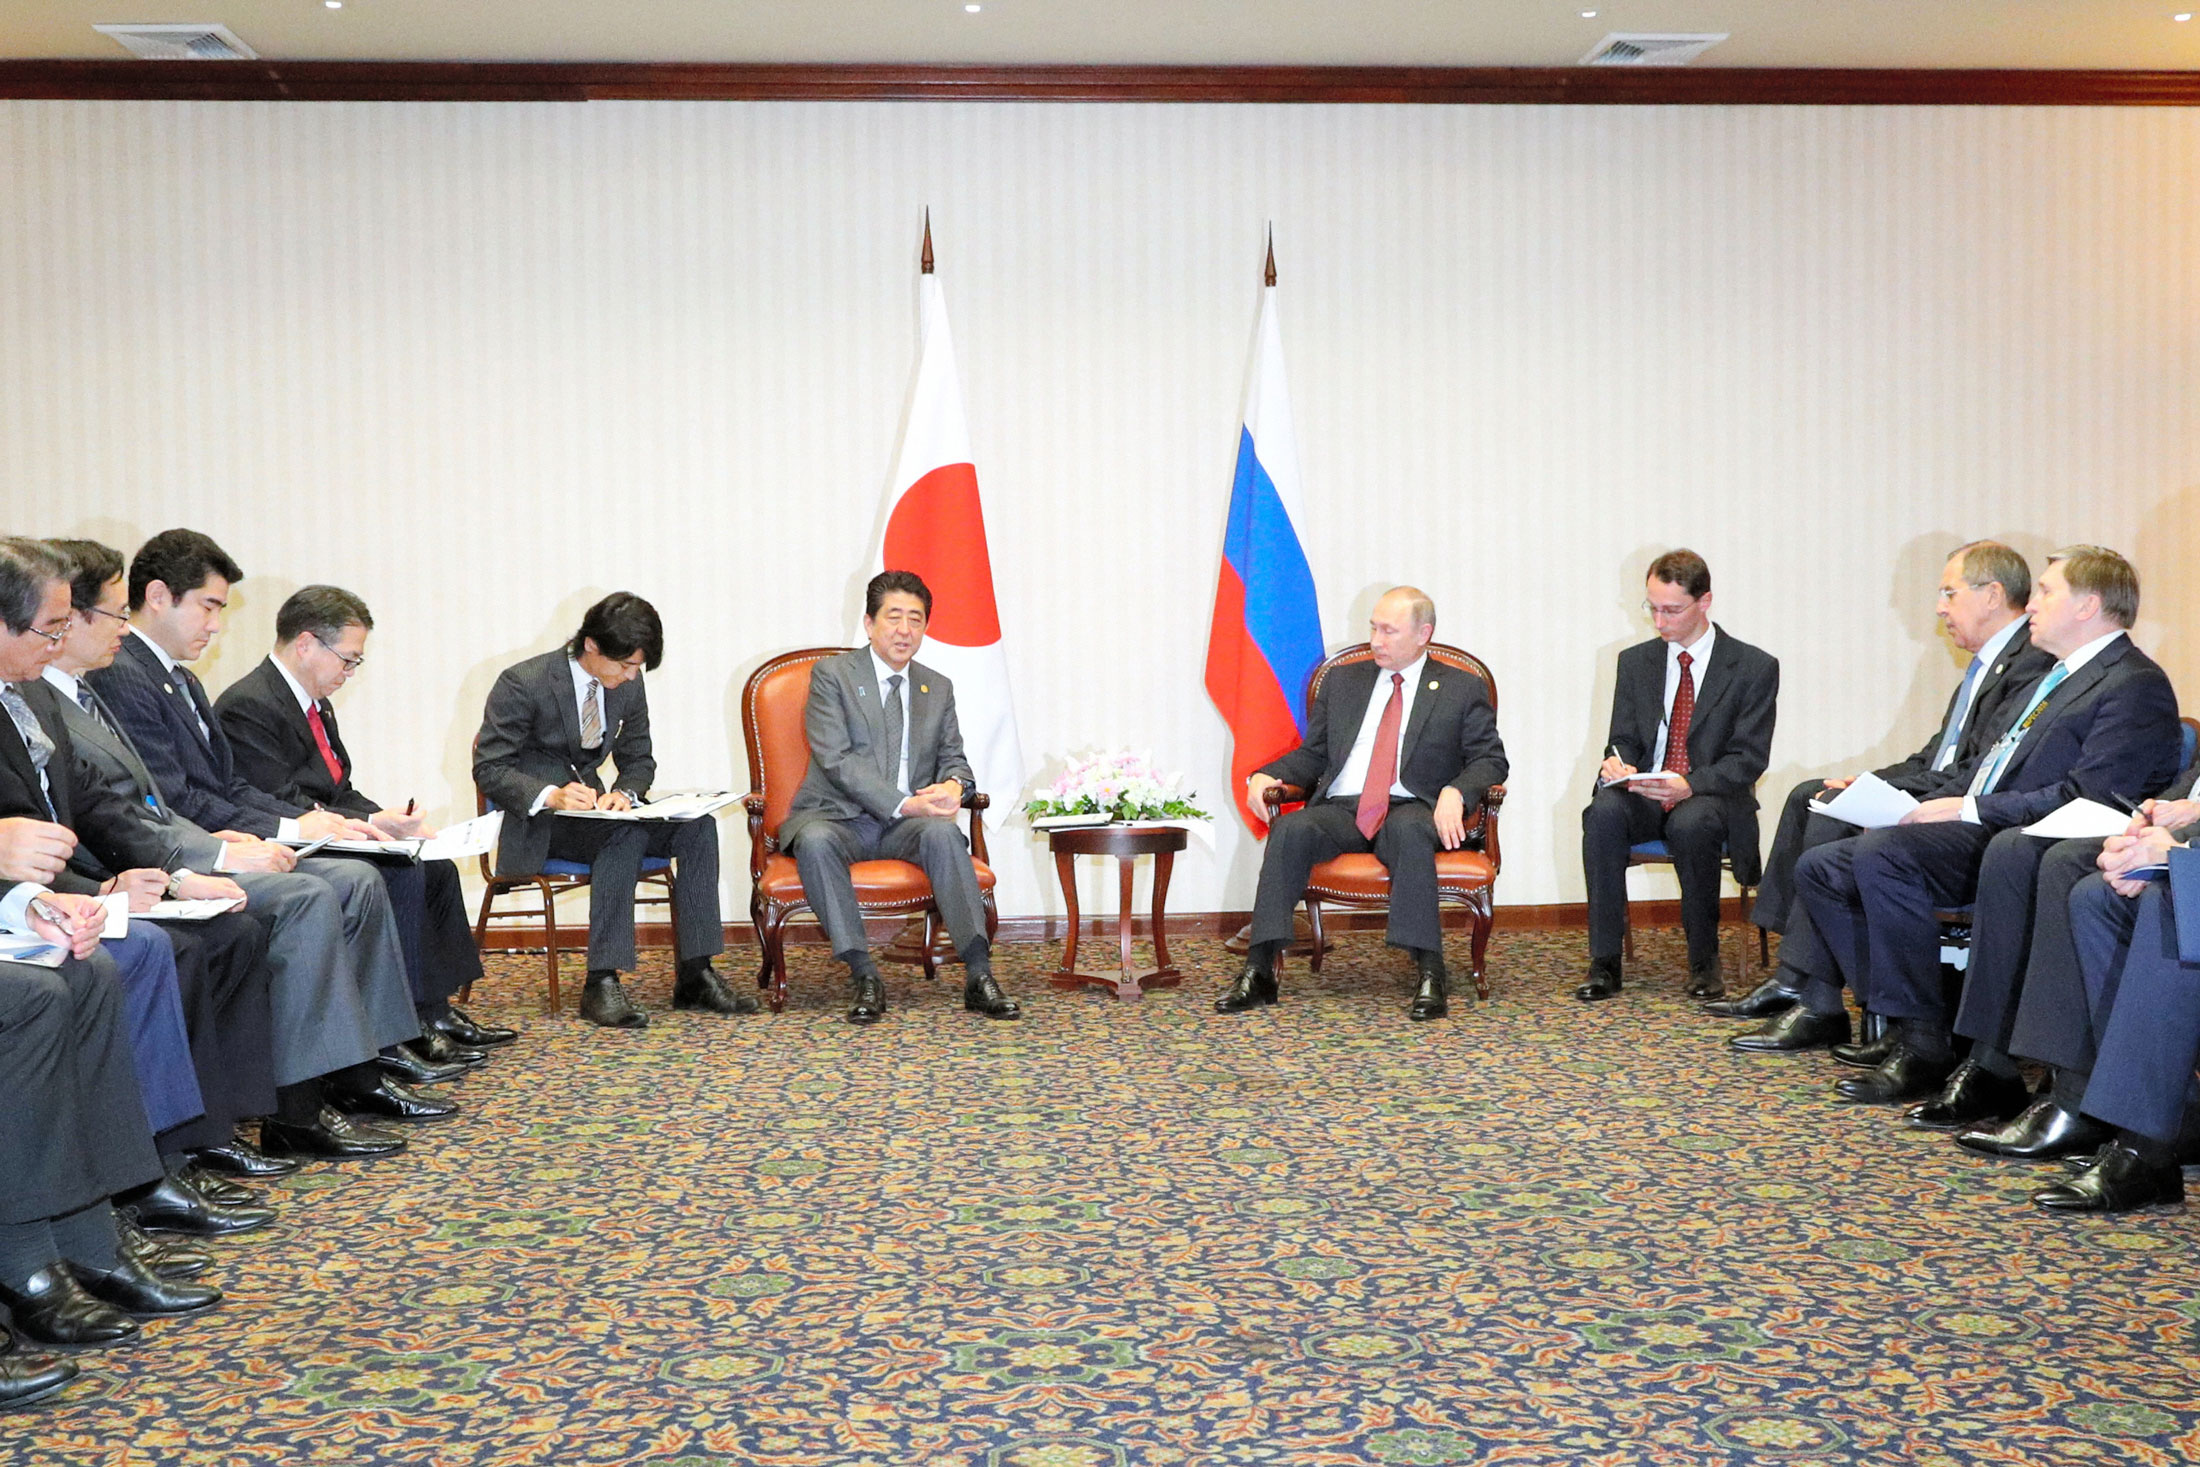 Japanese Prime Minister Shinzo Abe and Russian President Vladimir Putin meet during the APEC summit on Nov. 19.
